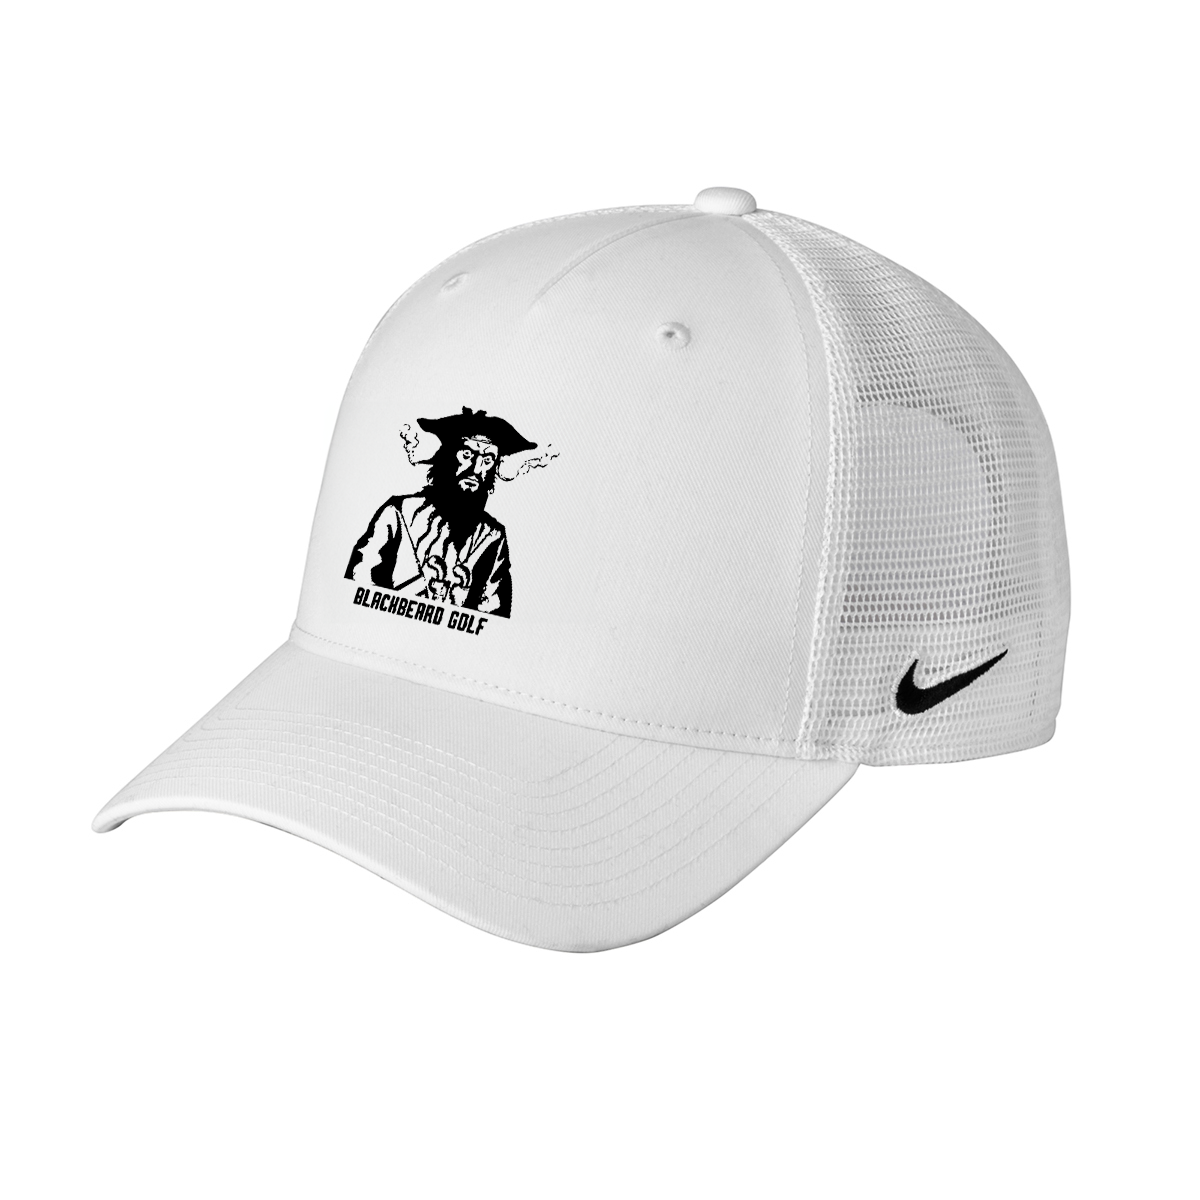 Blackbeard Golf Nike Snapback Mesh Trucker Cap